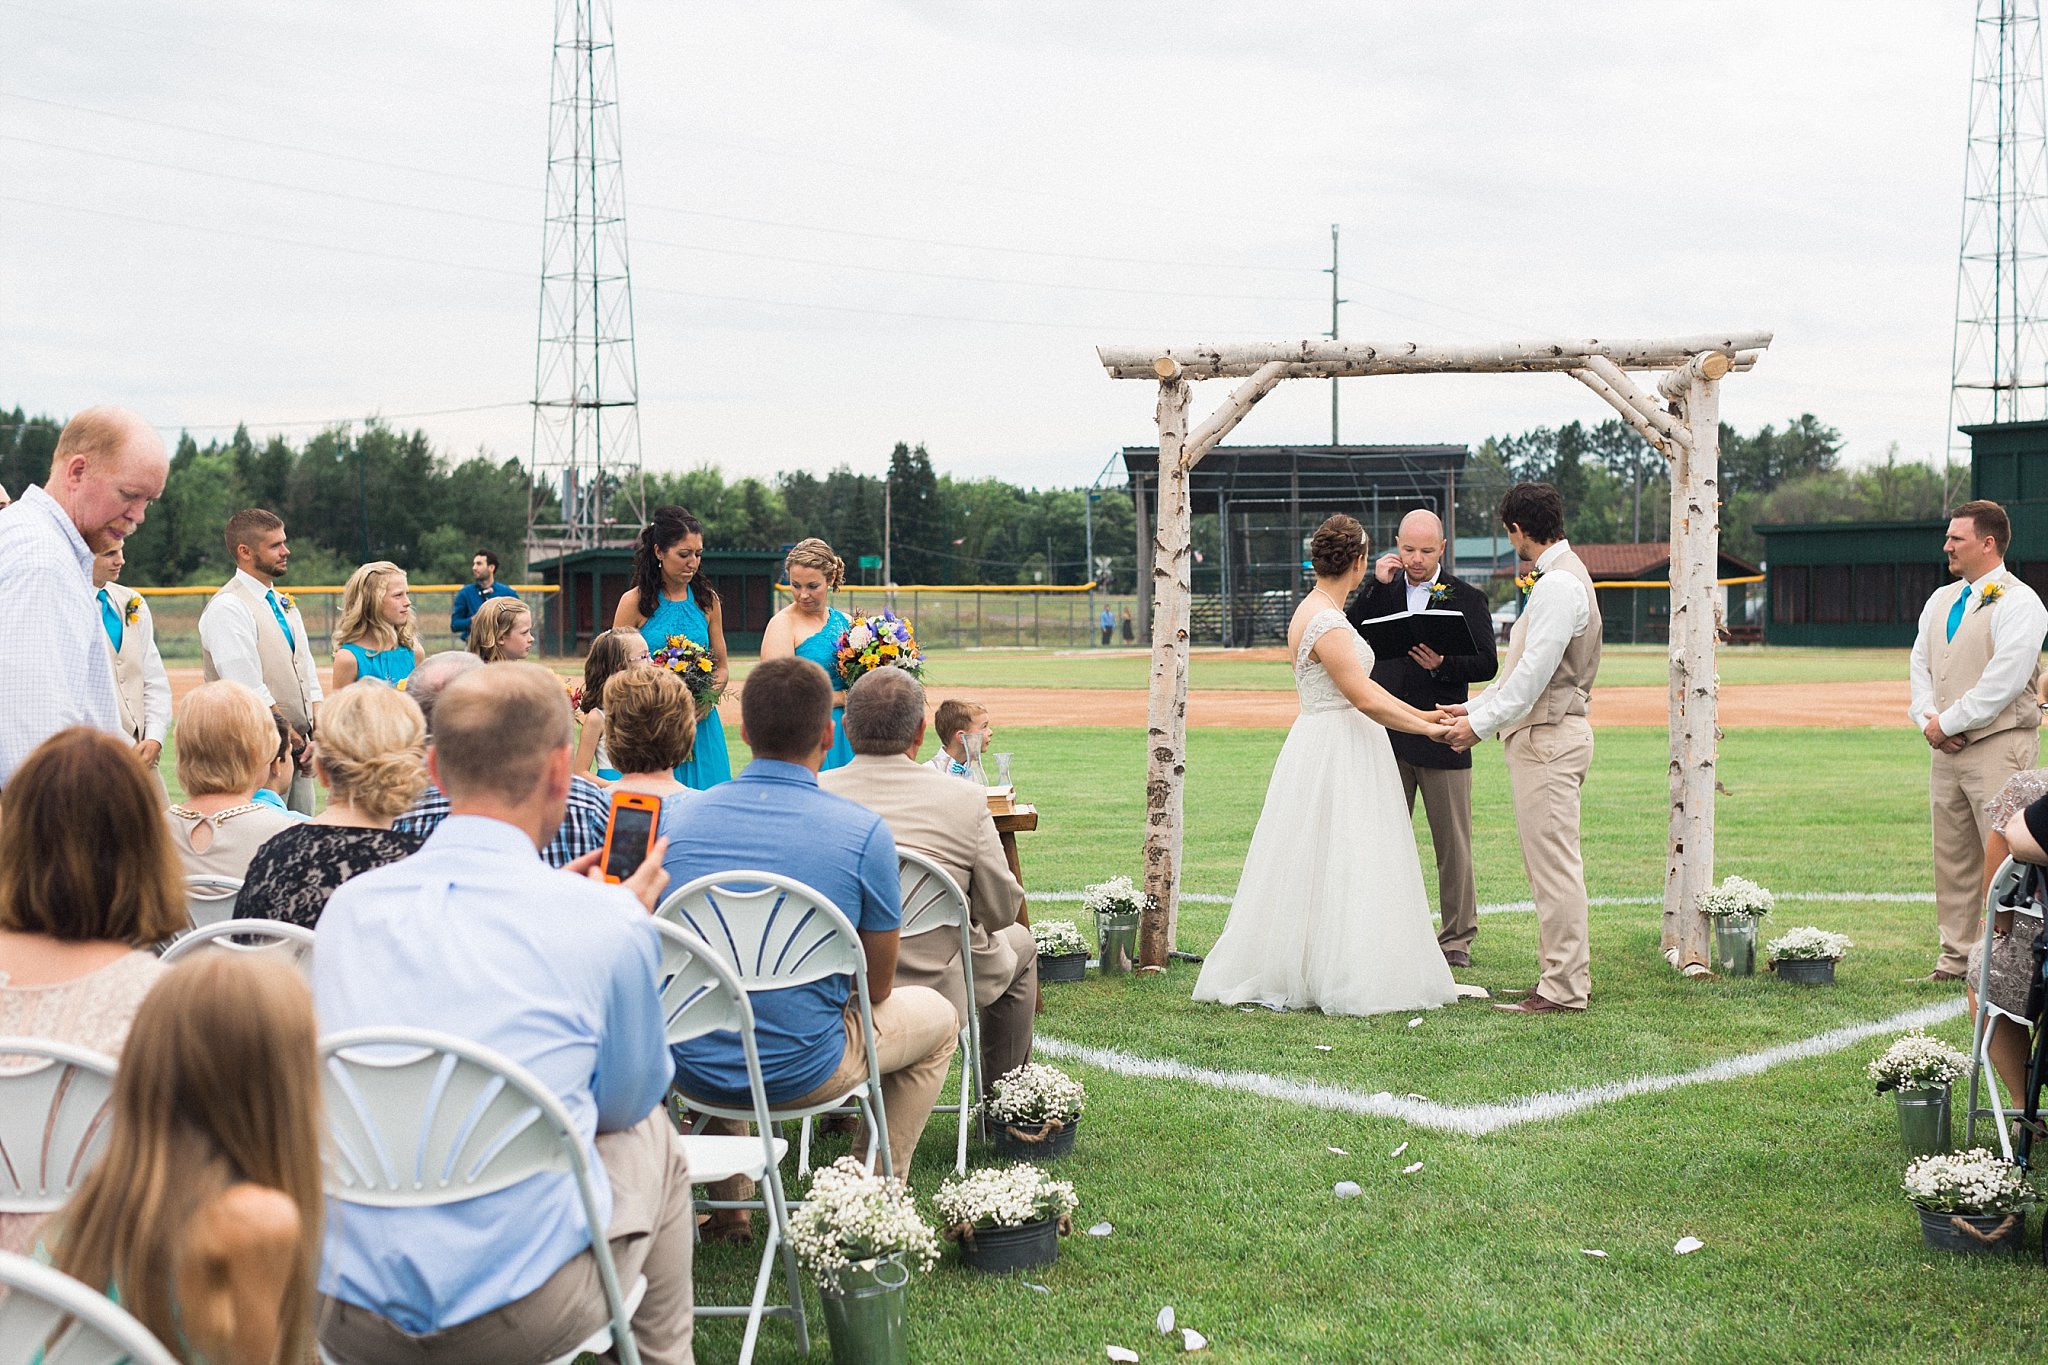 www.james-stokes.com | James Stokes Photography, LLC - Rustic country wedding ceremony - baseball wedding - Wisconsin wedding photographer